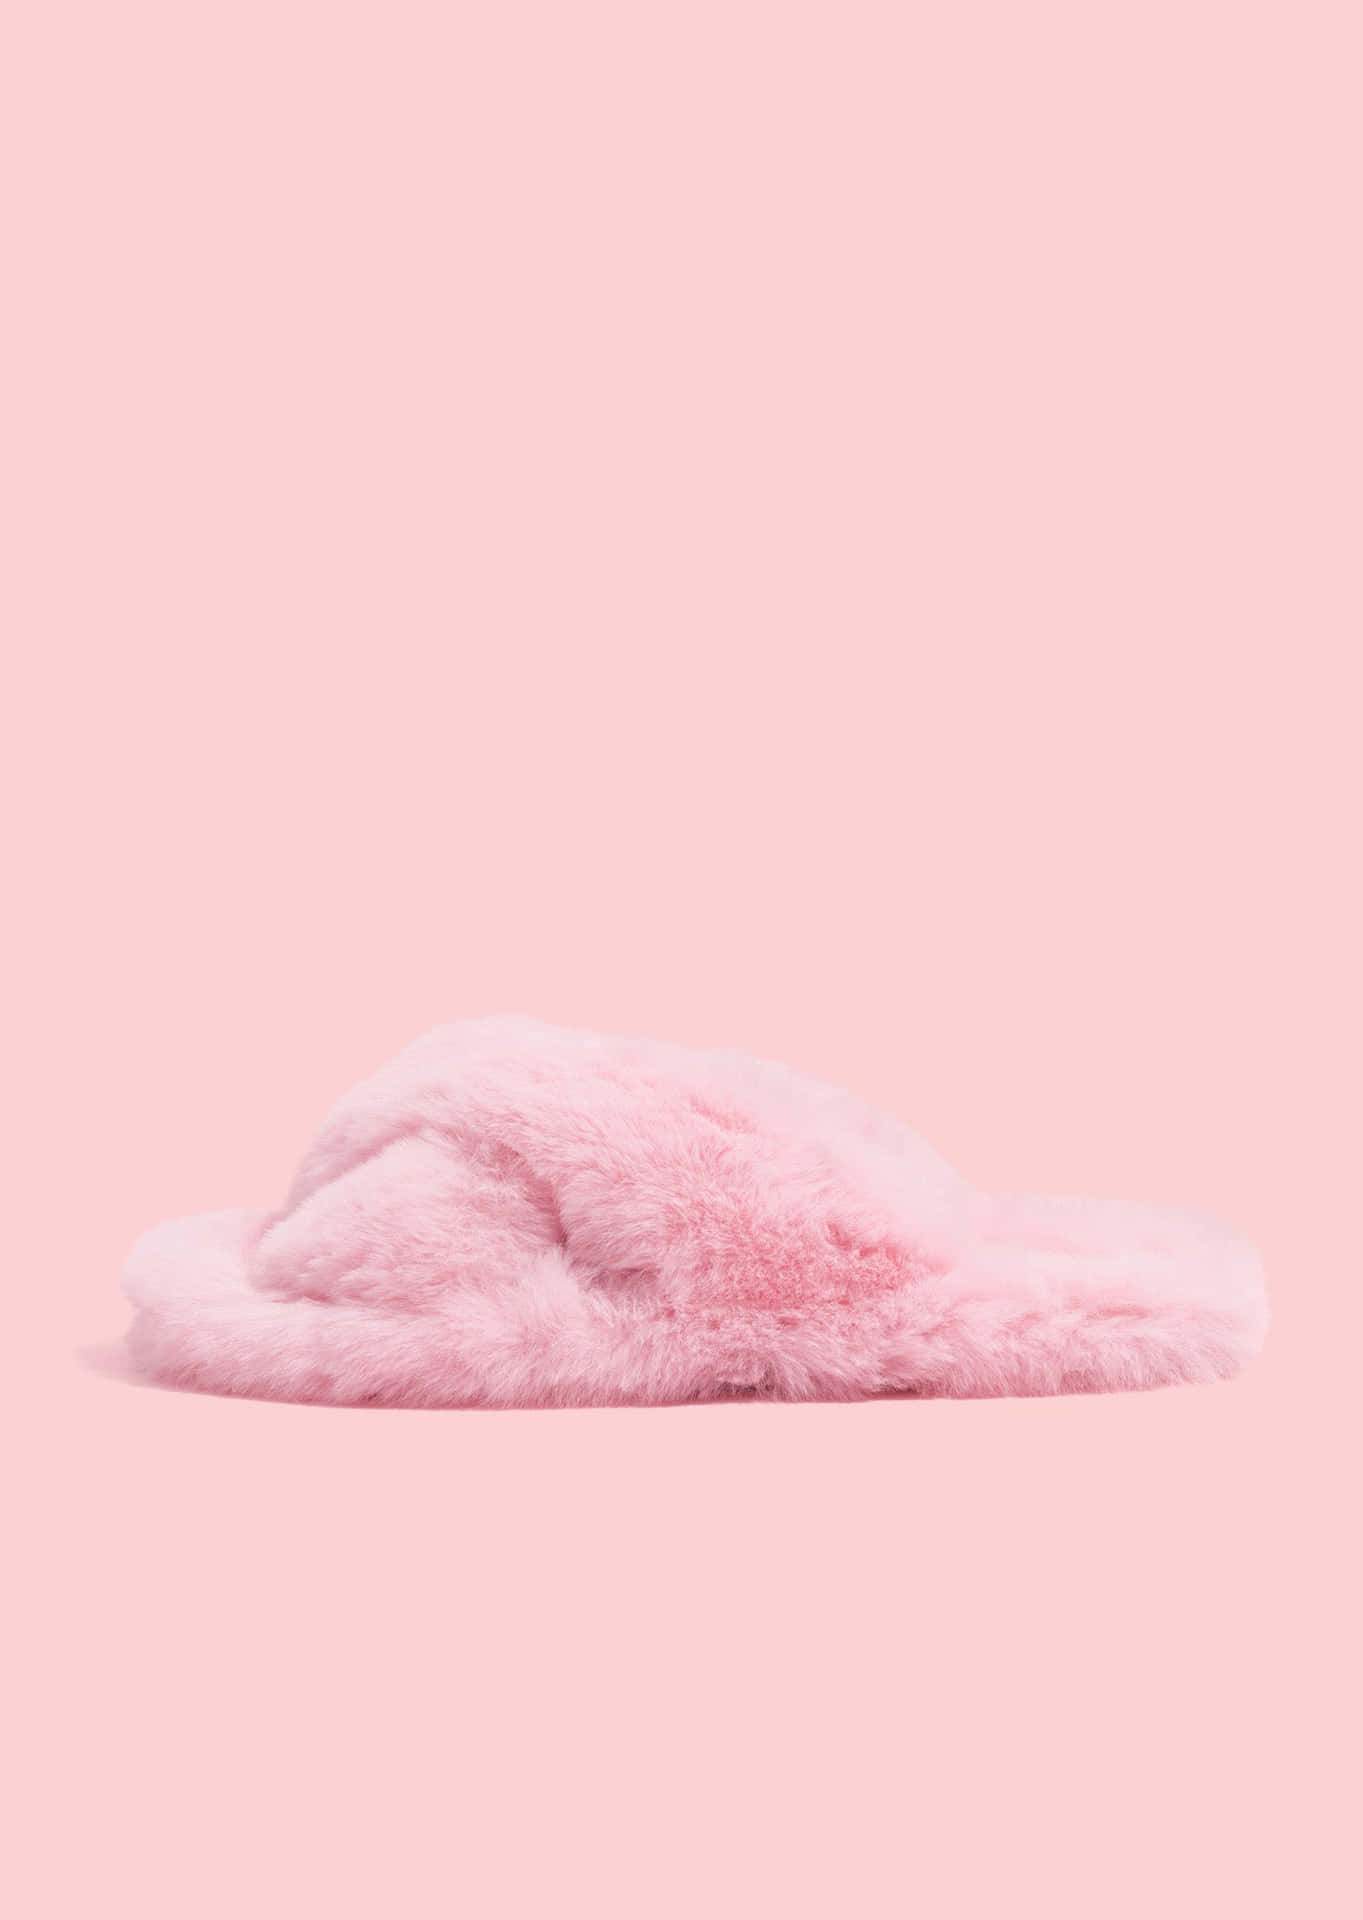 Pink Fluffy Slipperon Pastel Background.jpg Wallpaper